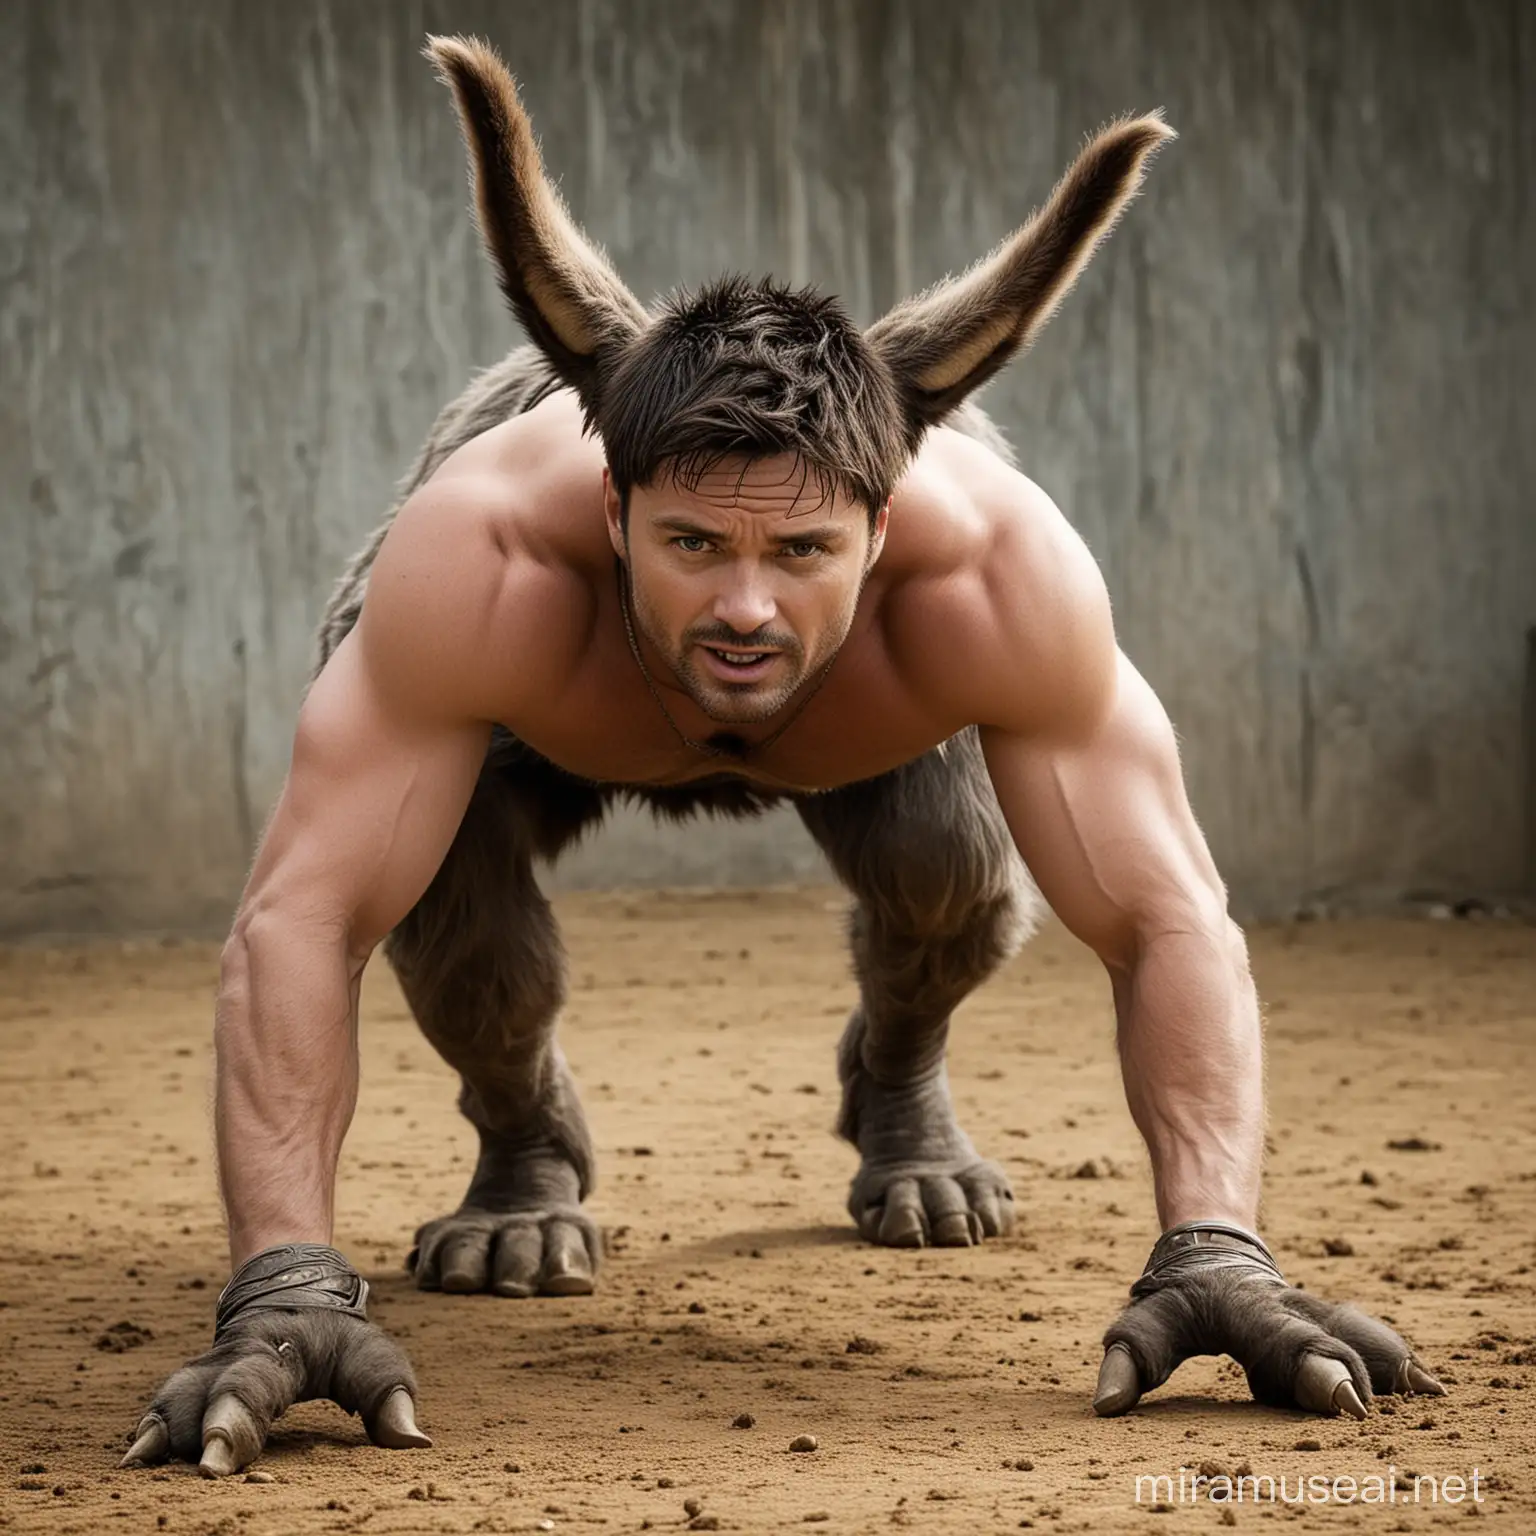 Actor Karl Urban Transforms into a Braying Donkey